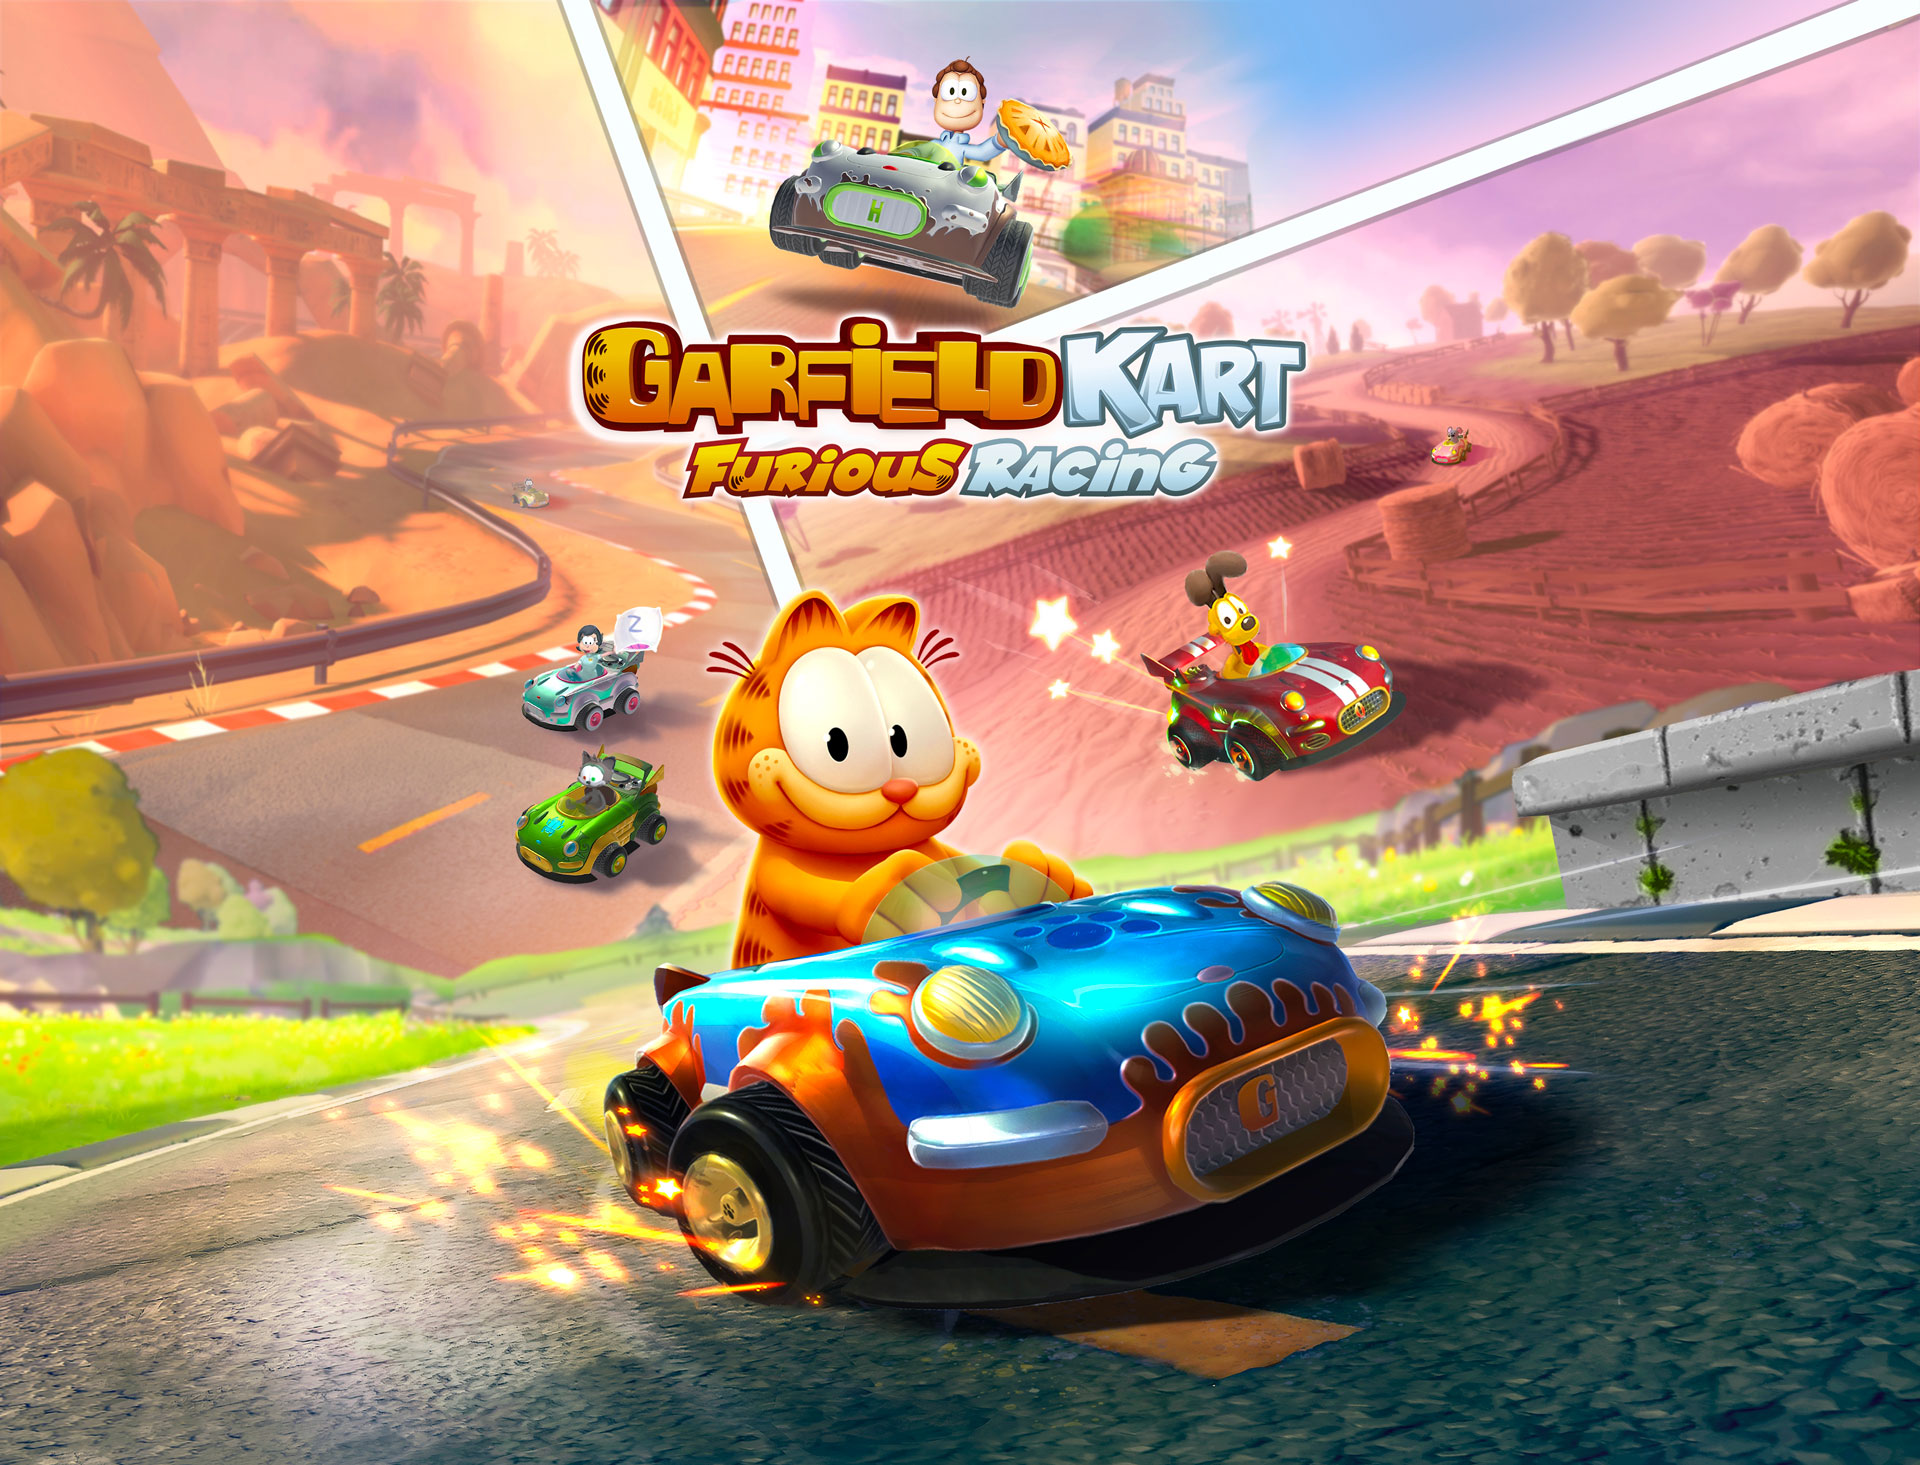 Garfield Kart Furious Racing: Everything We Know